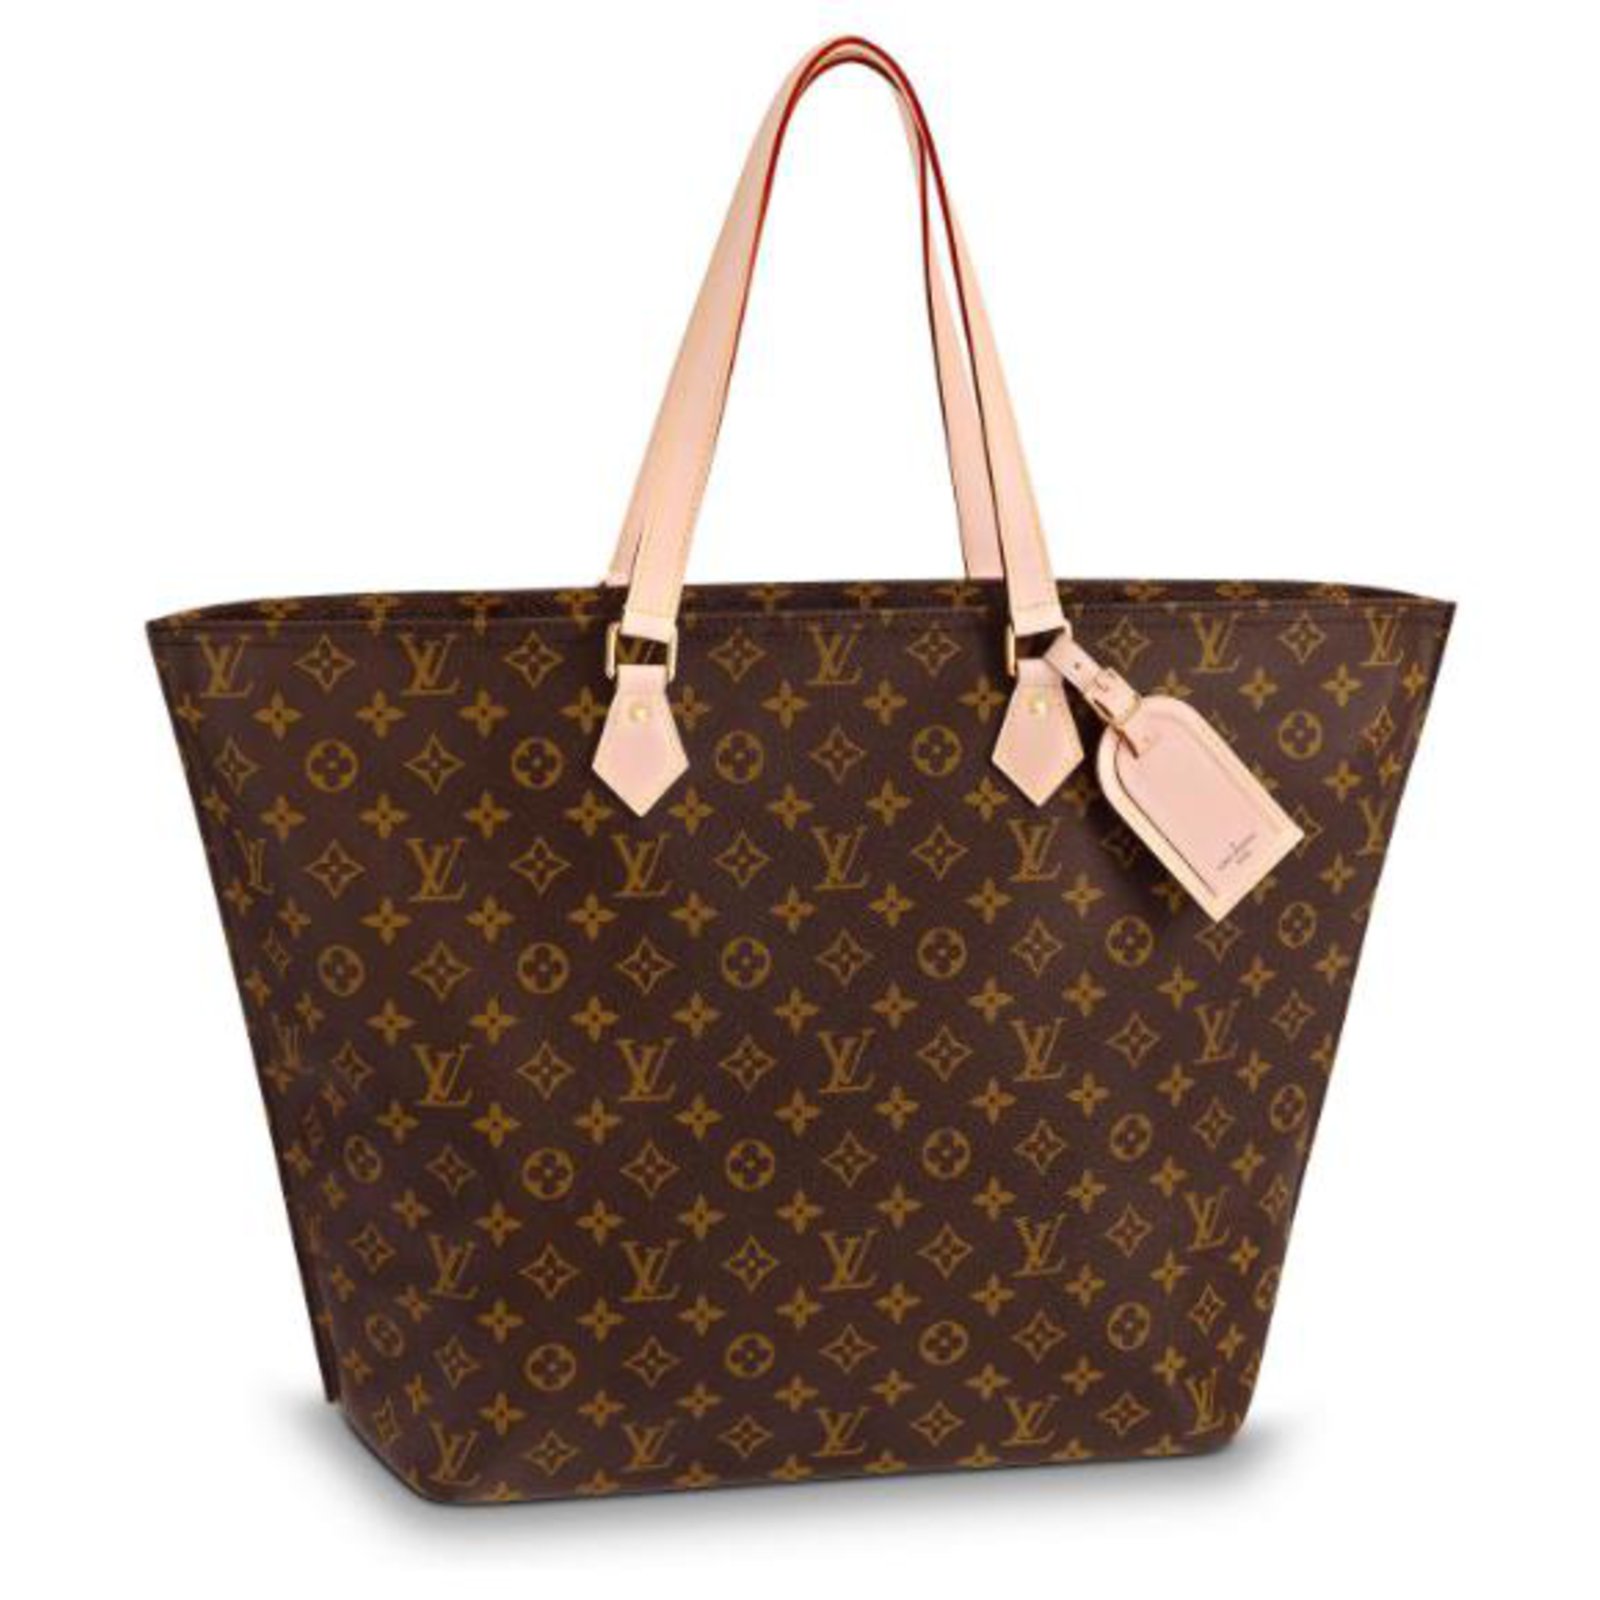 Aliexpress Louis Vuitton Bag Store, SAVE 52% 